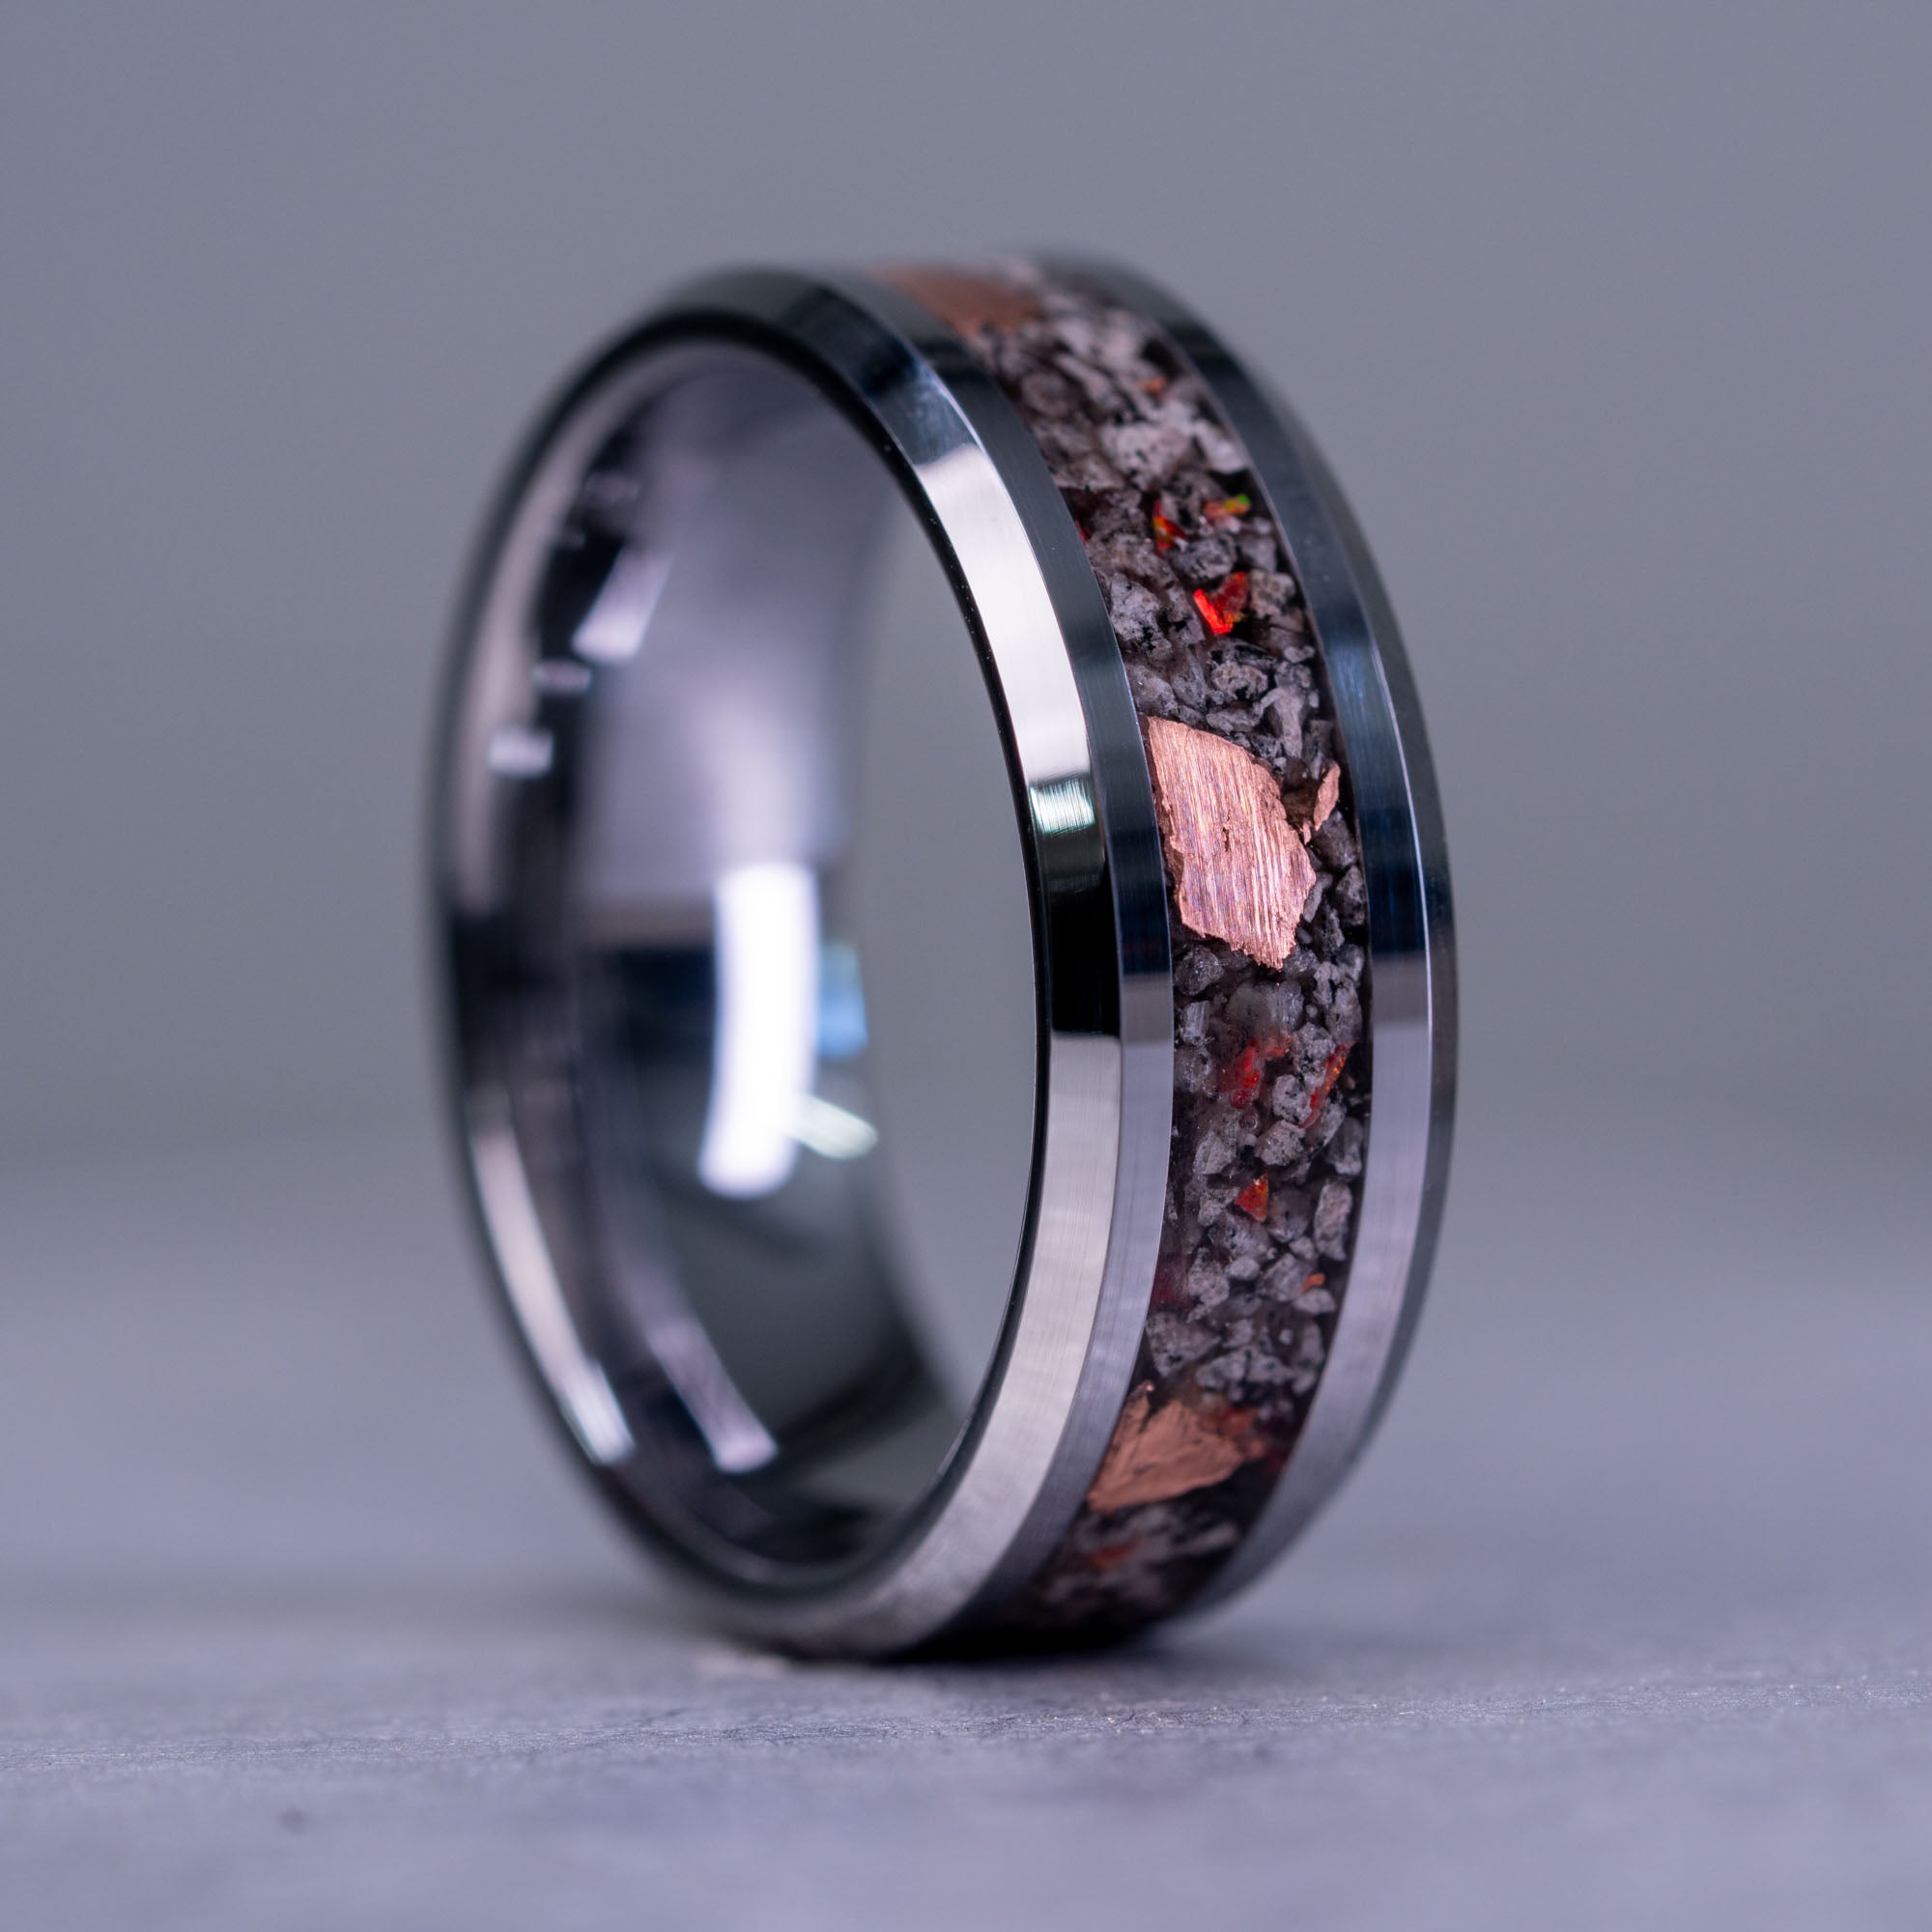 Beveled Tungsten Fire Opal Yooper Glow & Copper Inlay Ring